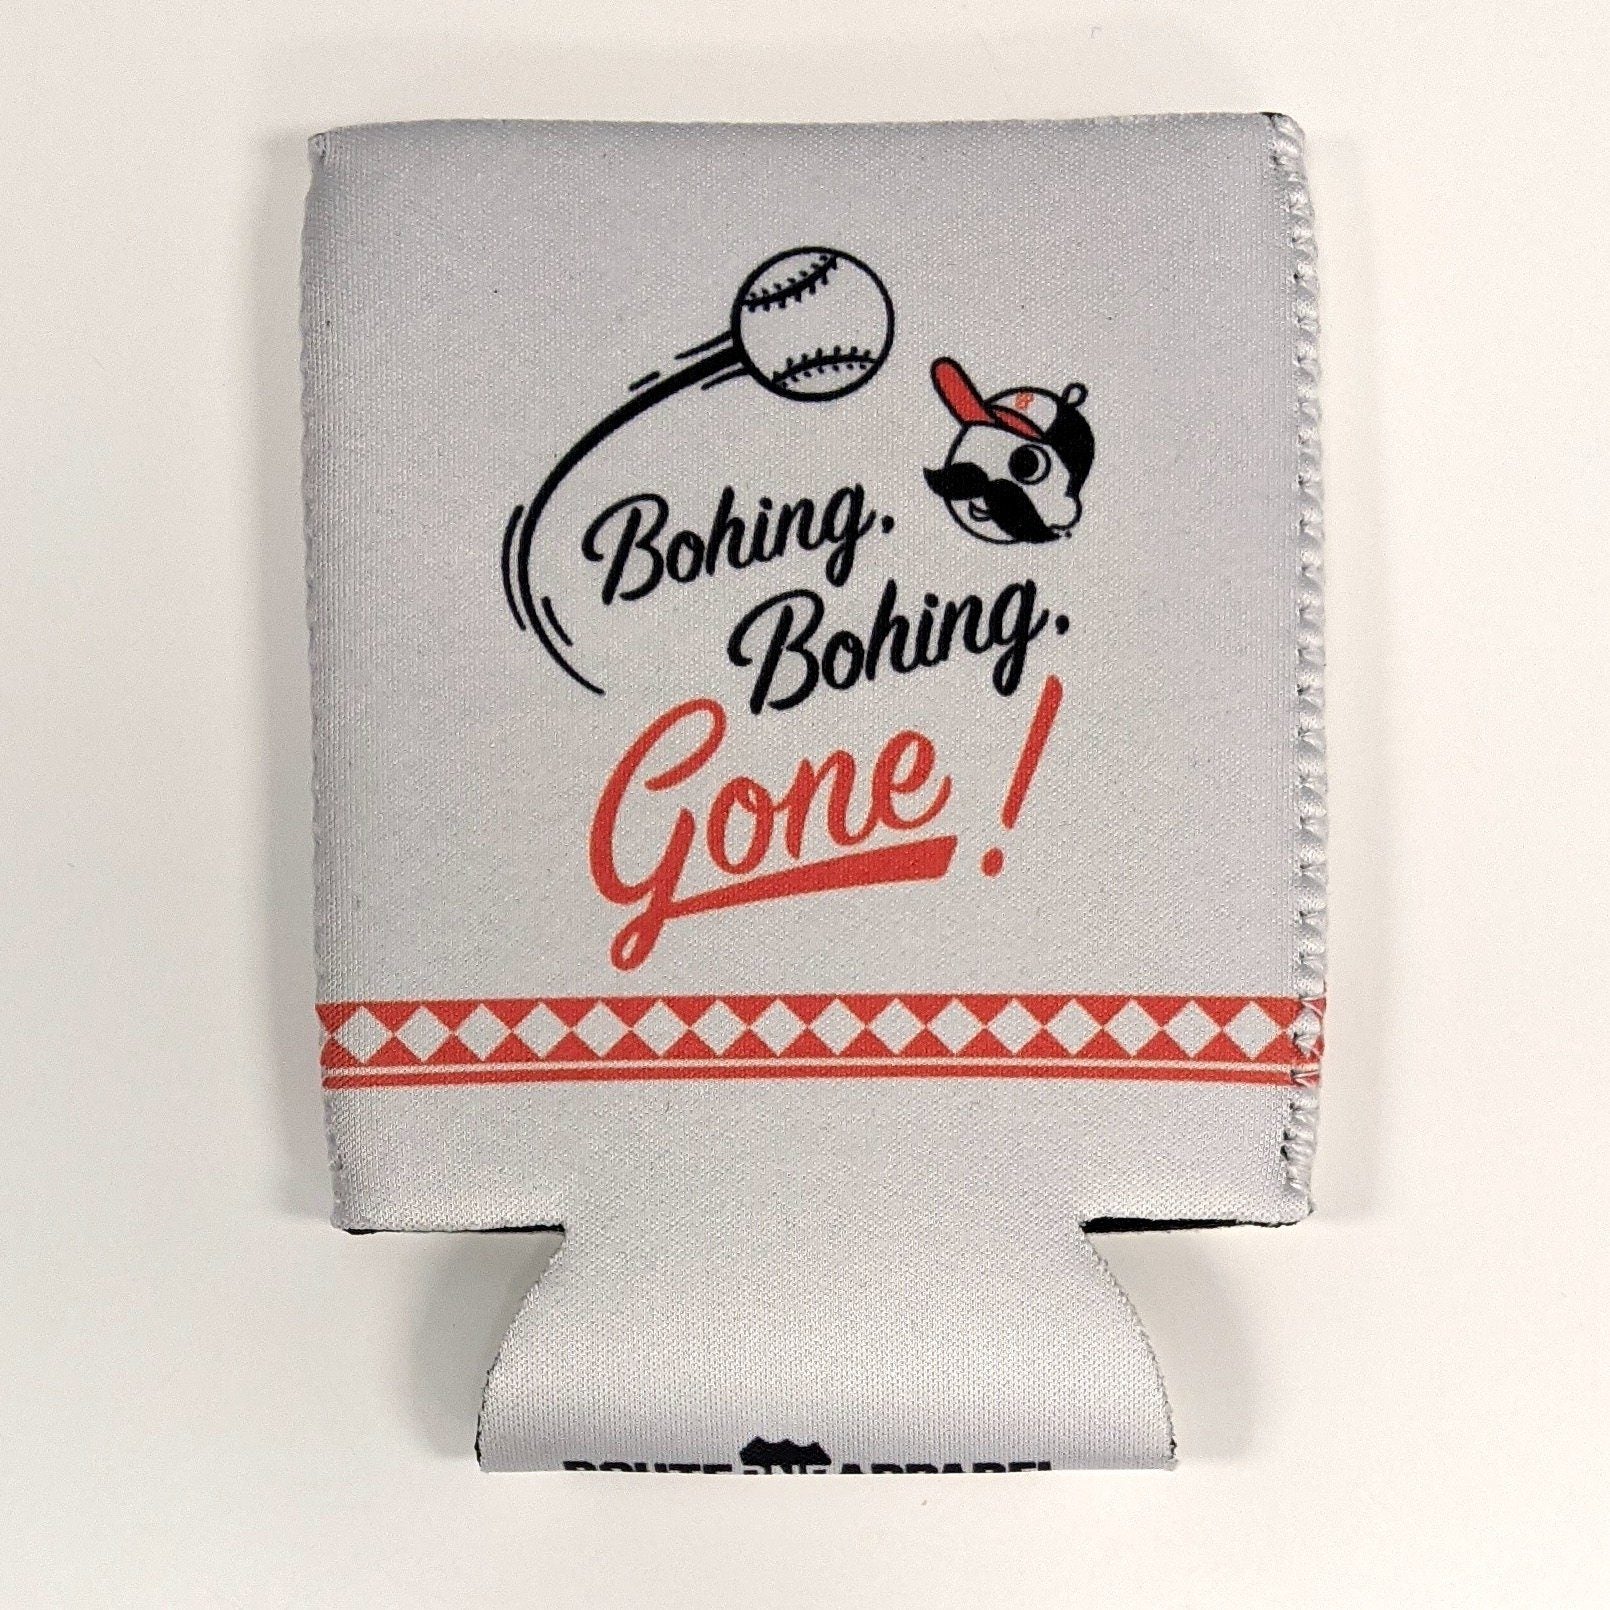 Bohing, Bohing, Gone! National Bohemian Baseball (White) / Can Cooler - Route One Apparel